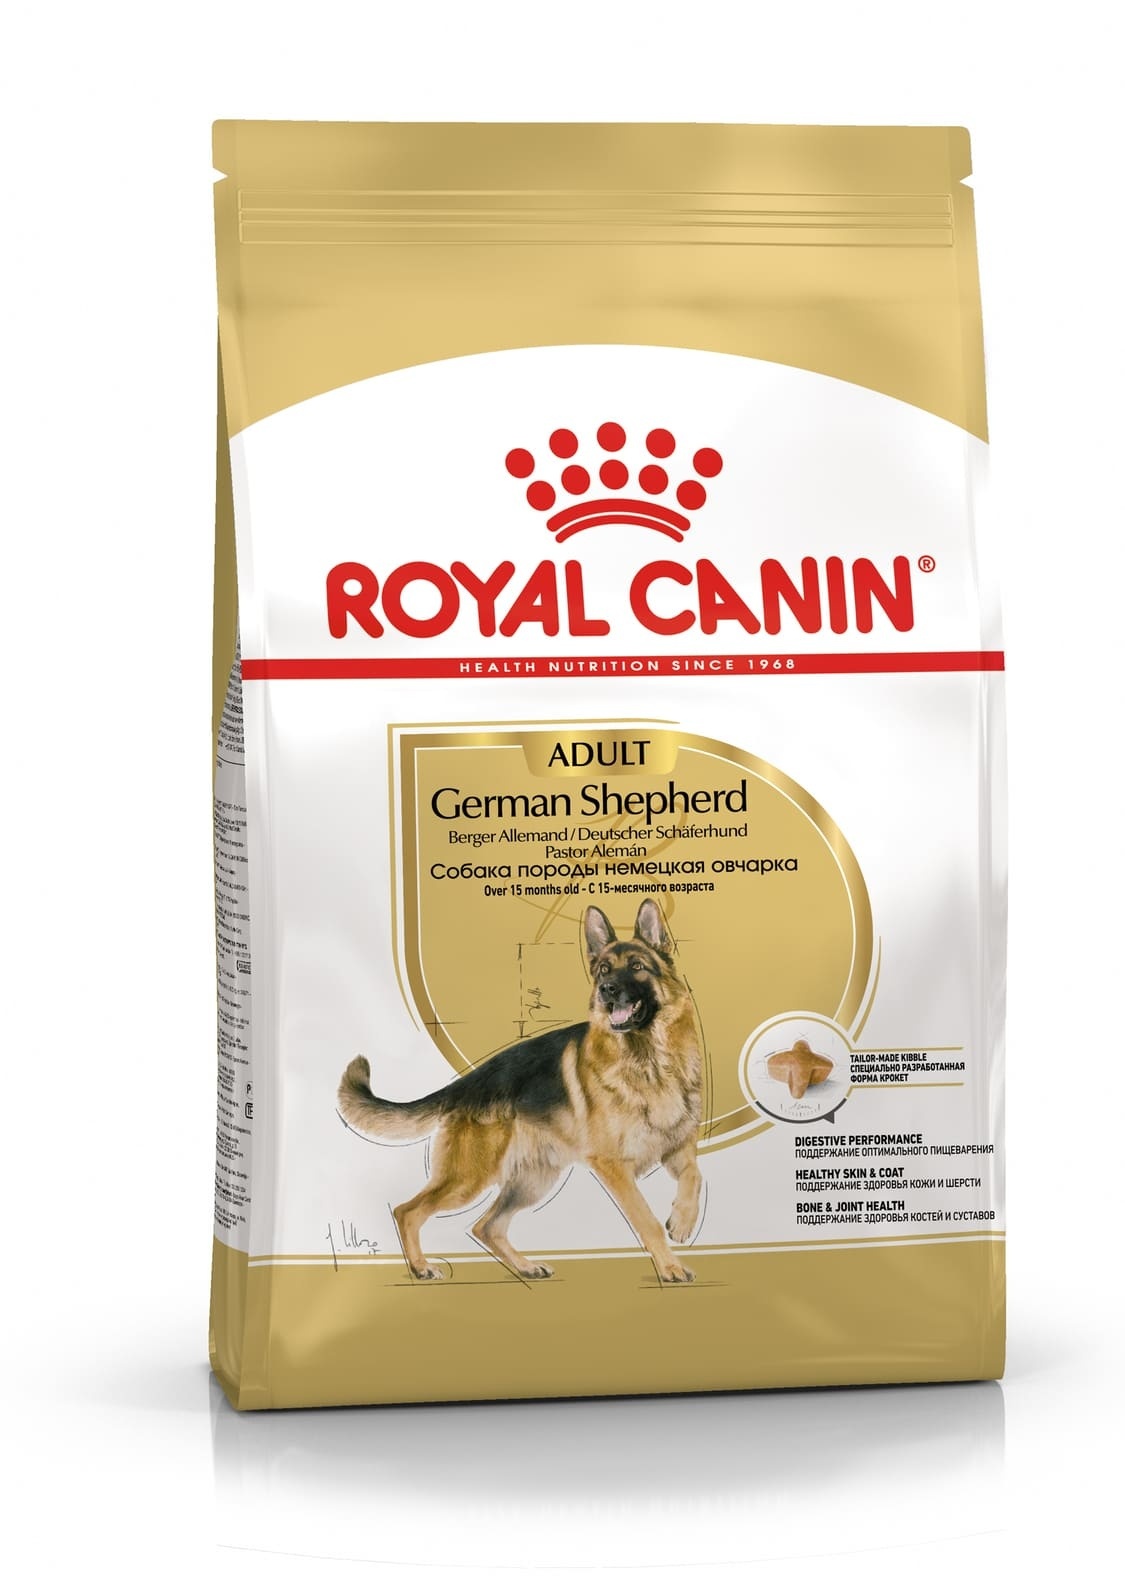 Royal Canin Royal Canin для взрослой немецкой овчарки с 15 месяцев (11 кг)